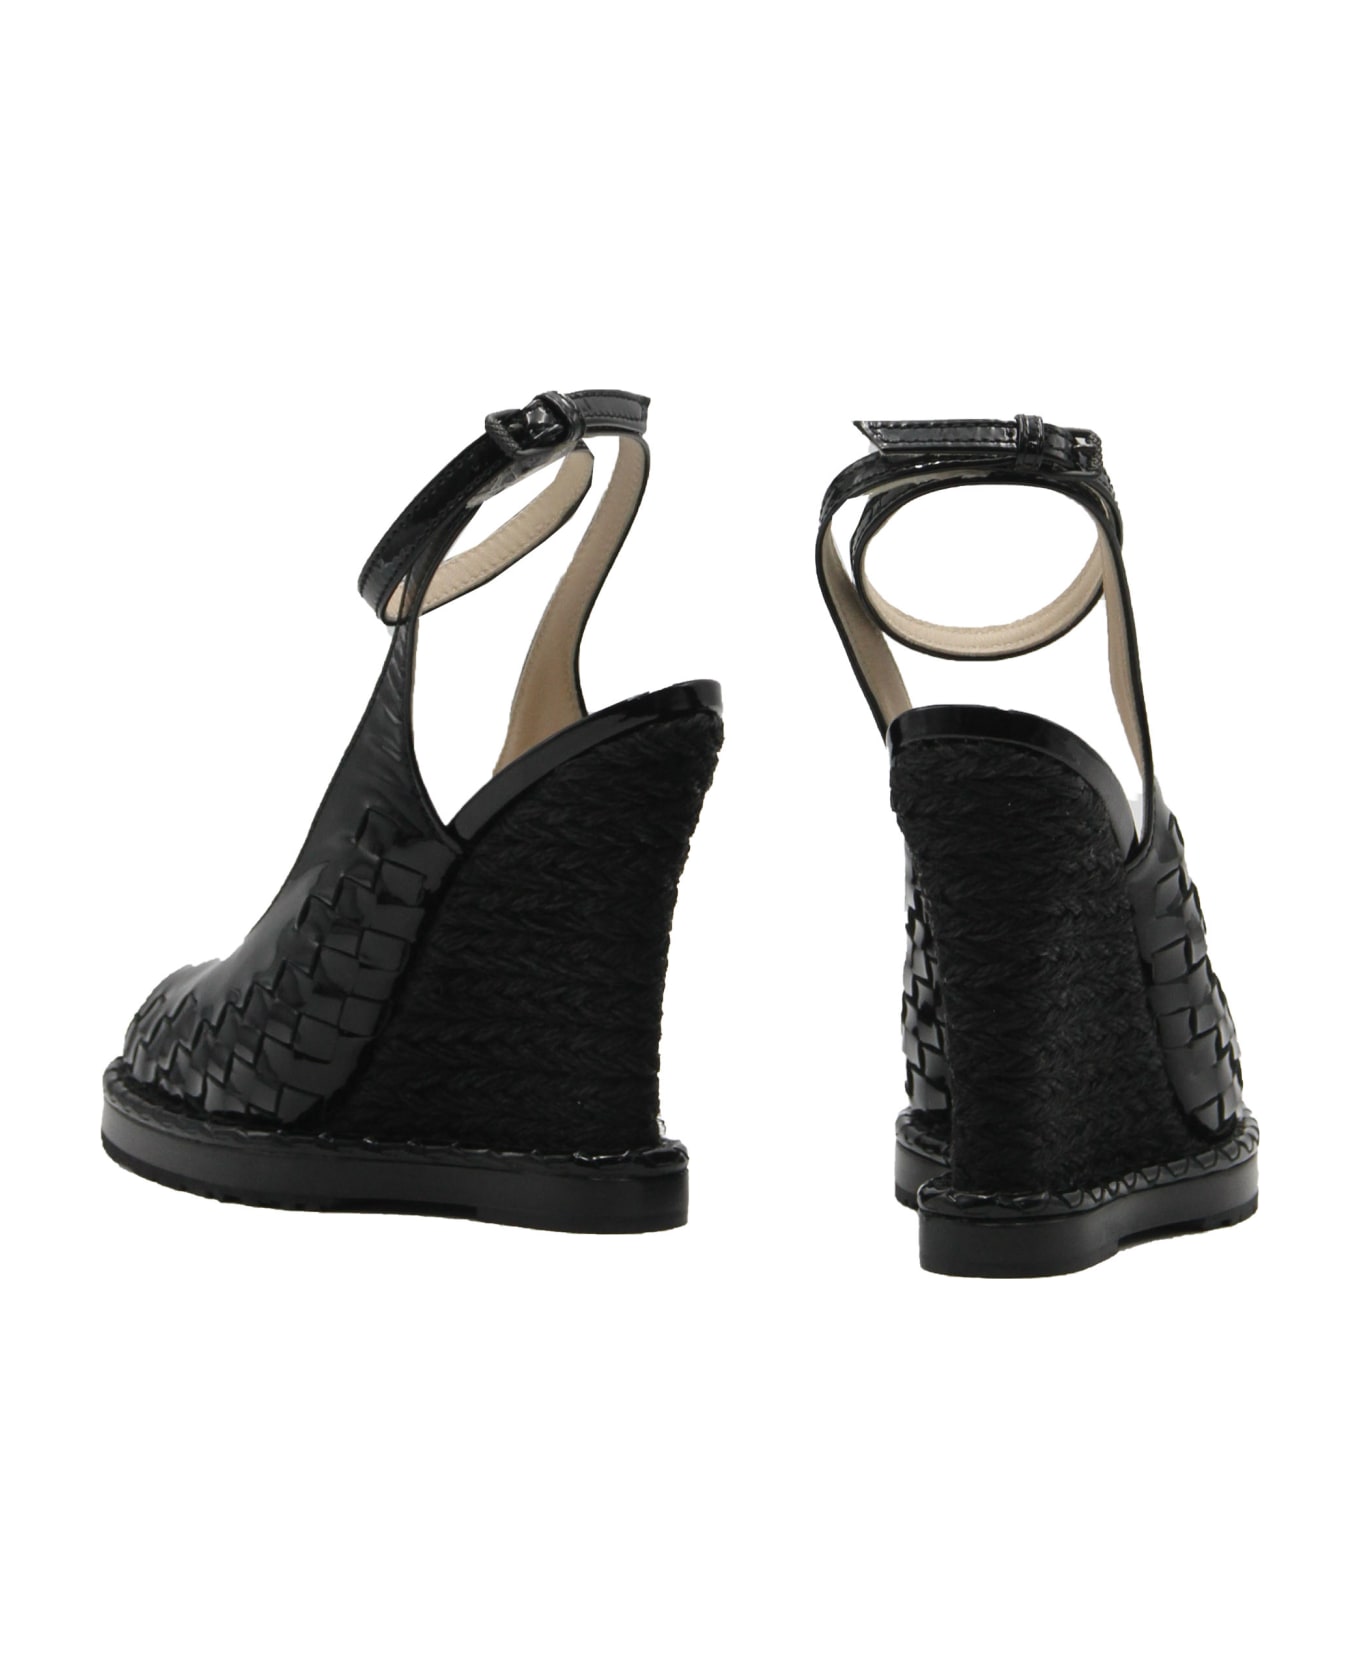 Bottega Veneta Patent Platform Sandals - black